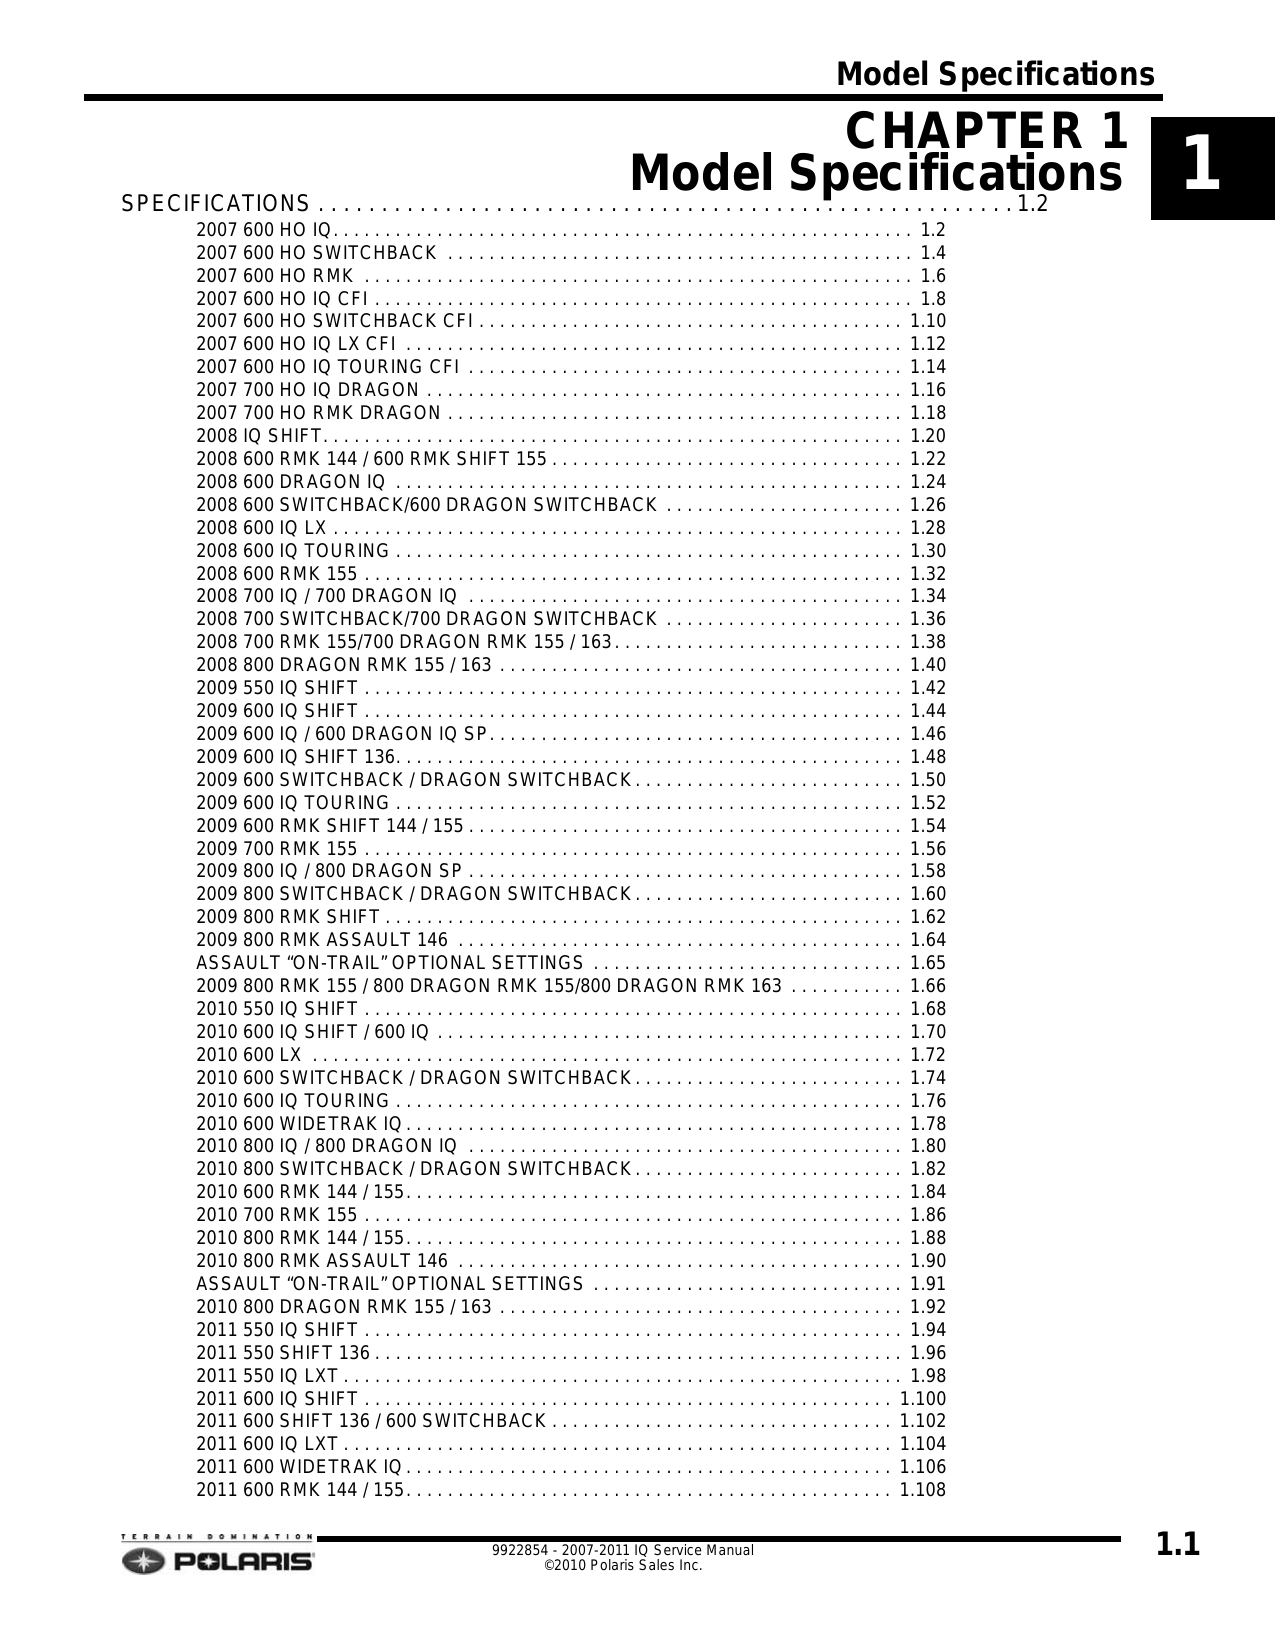 2007-2011 Polaris IQ, HO, Switchback, RMK, CFI, LX, Touring, Dragon, Shift, Widetrak, Assault, 136, 144, 155, 146, 163, 600, 700, 800, 550 repair manual Preview image 1